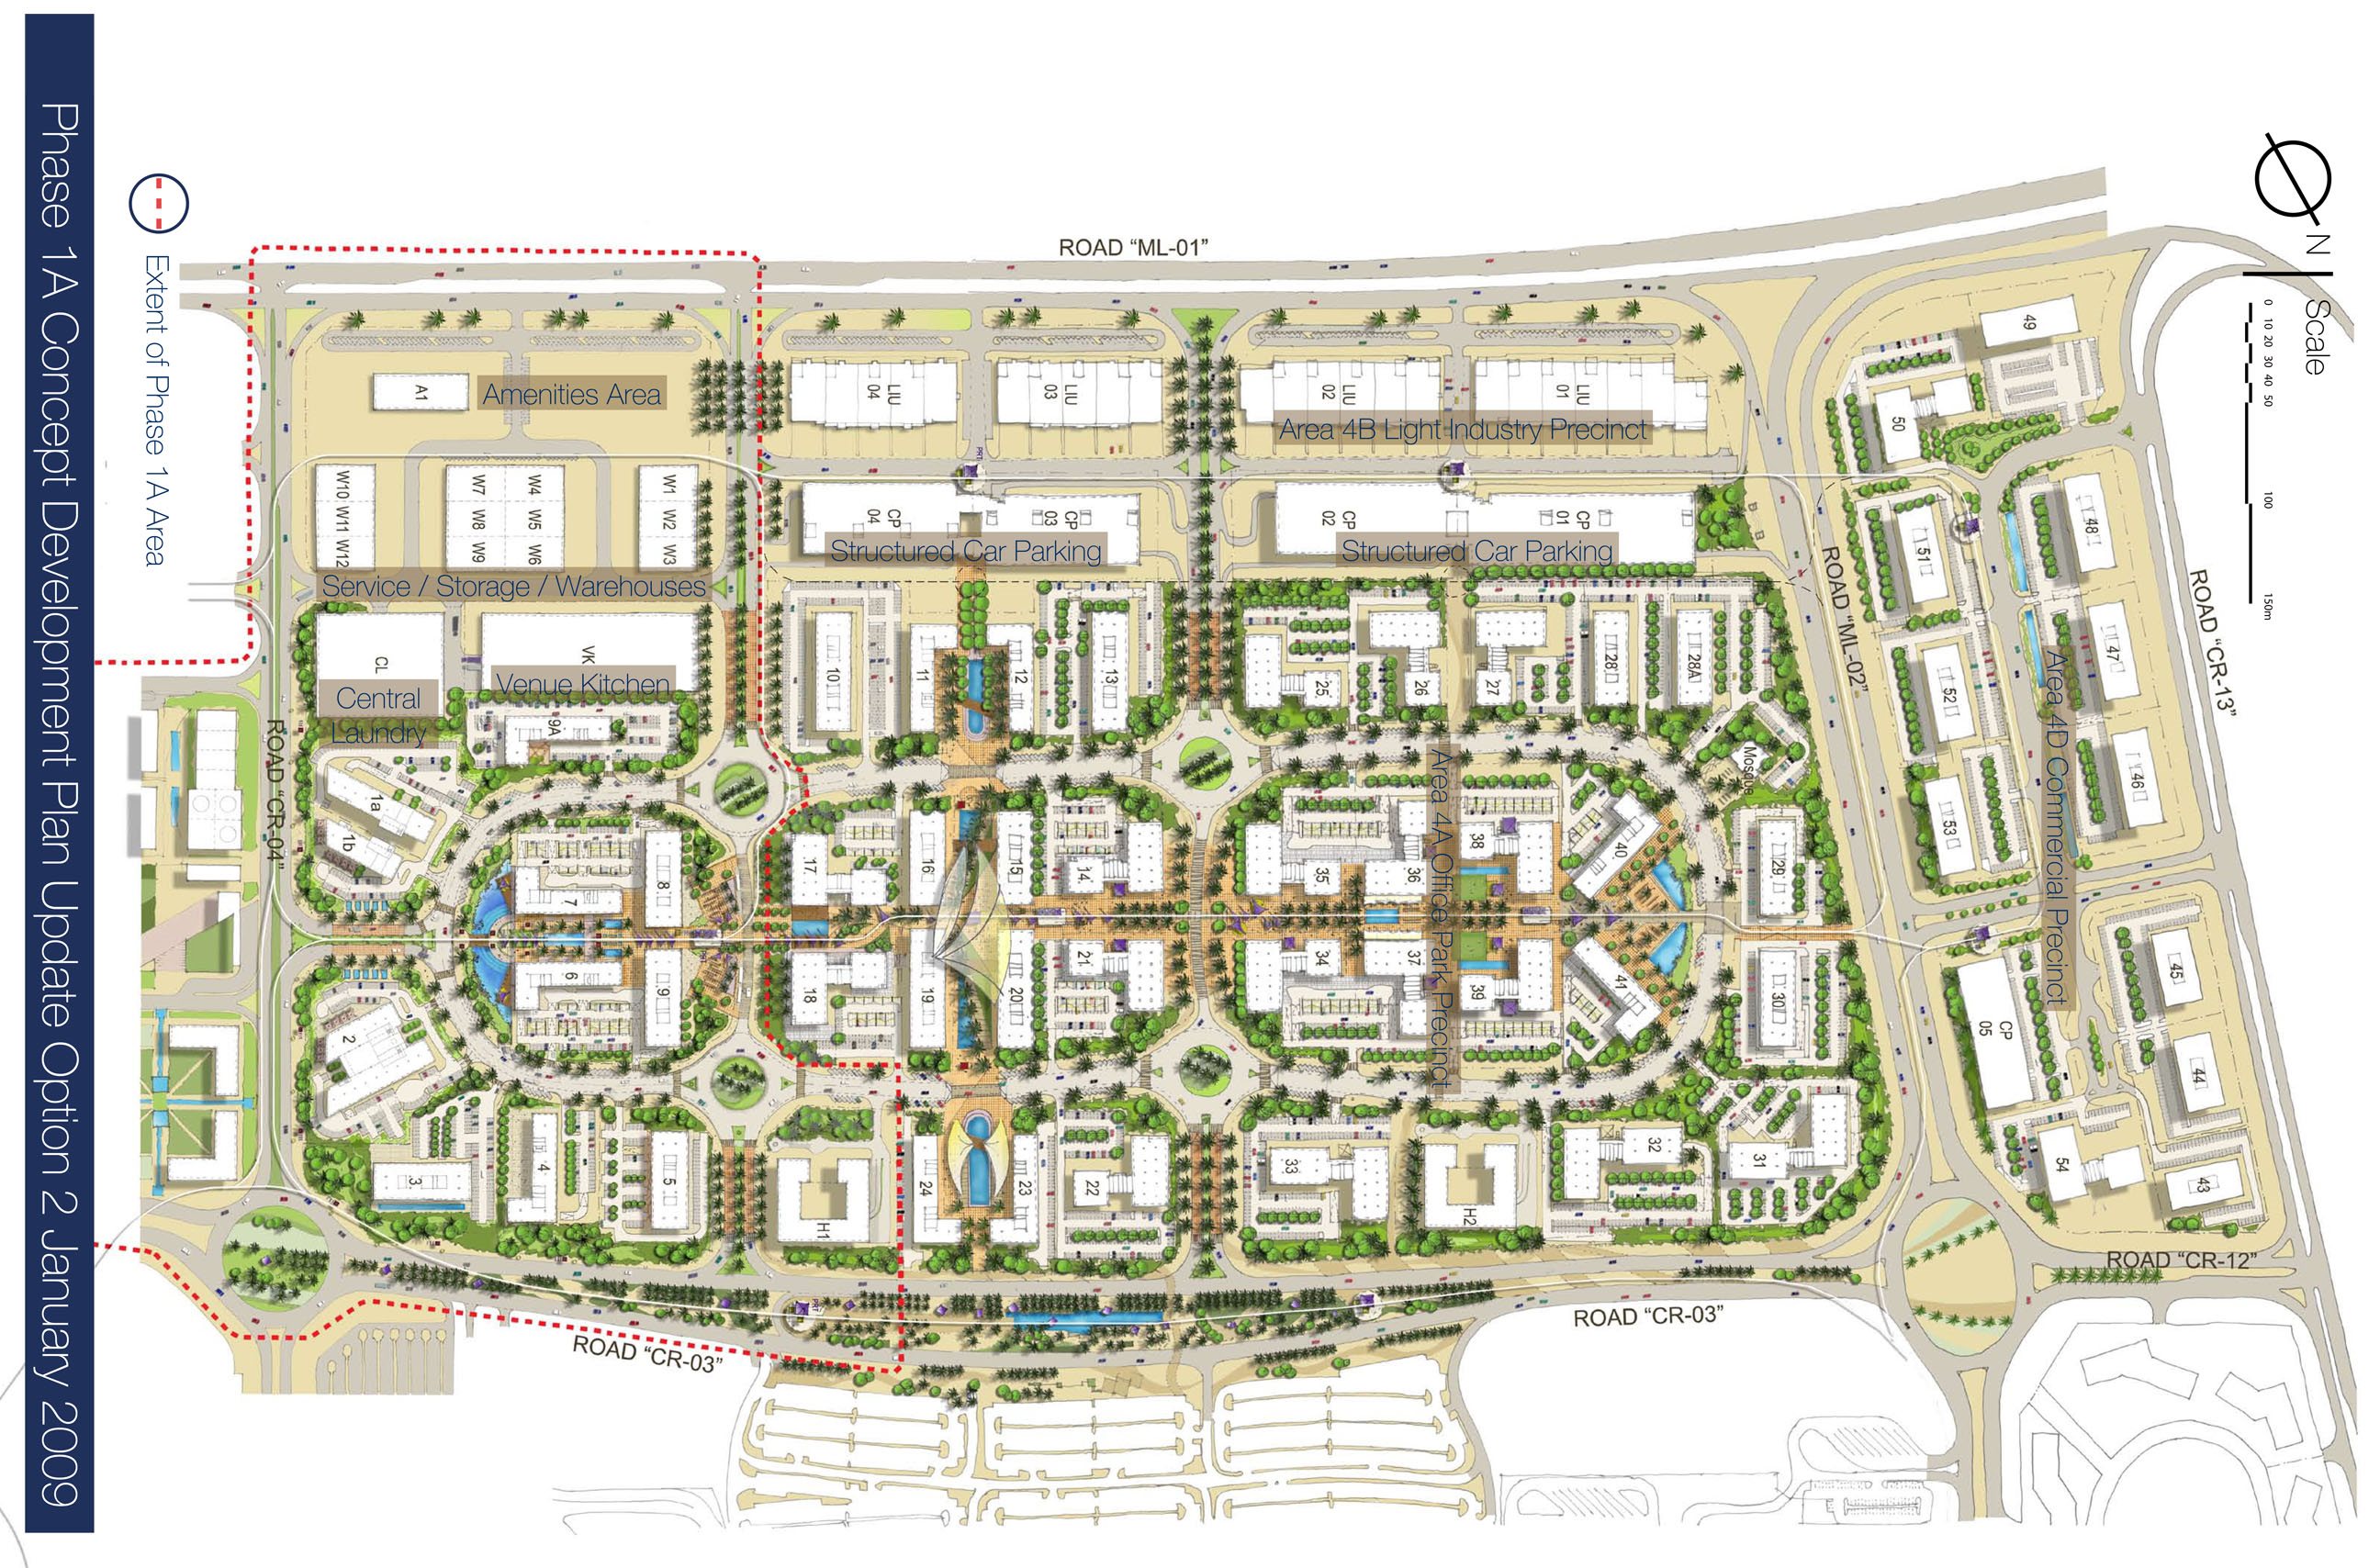 Image of the design concept for Dubai Exhibition city - 2009